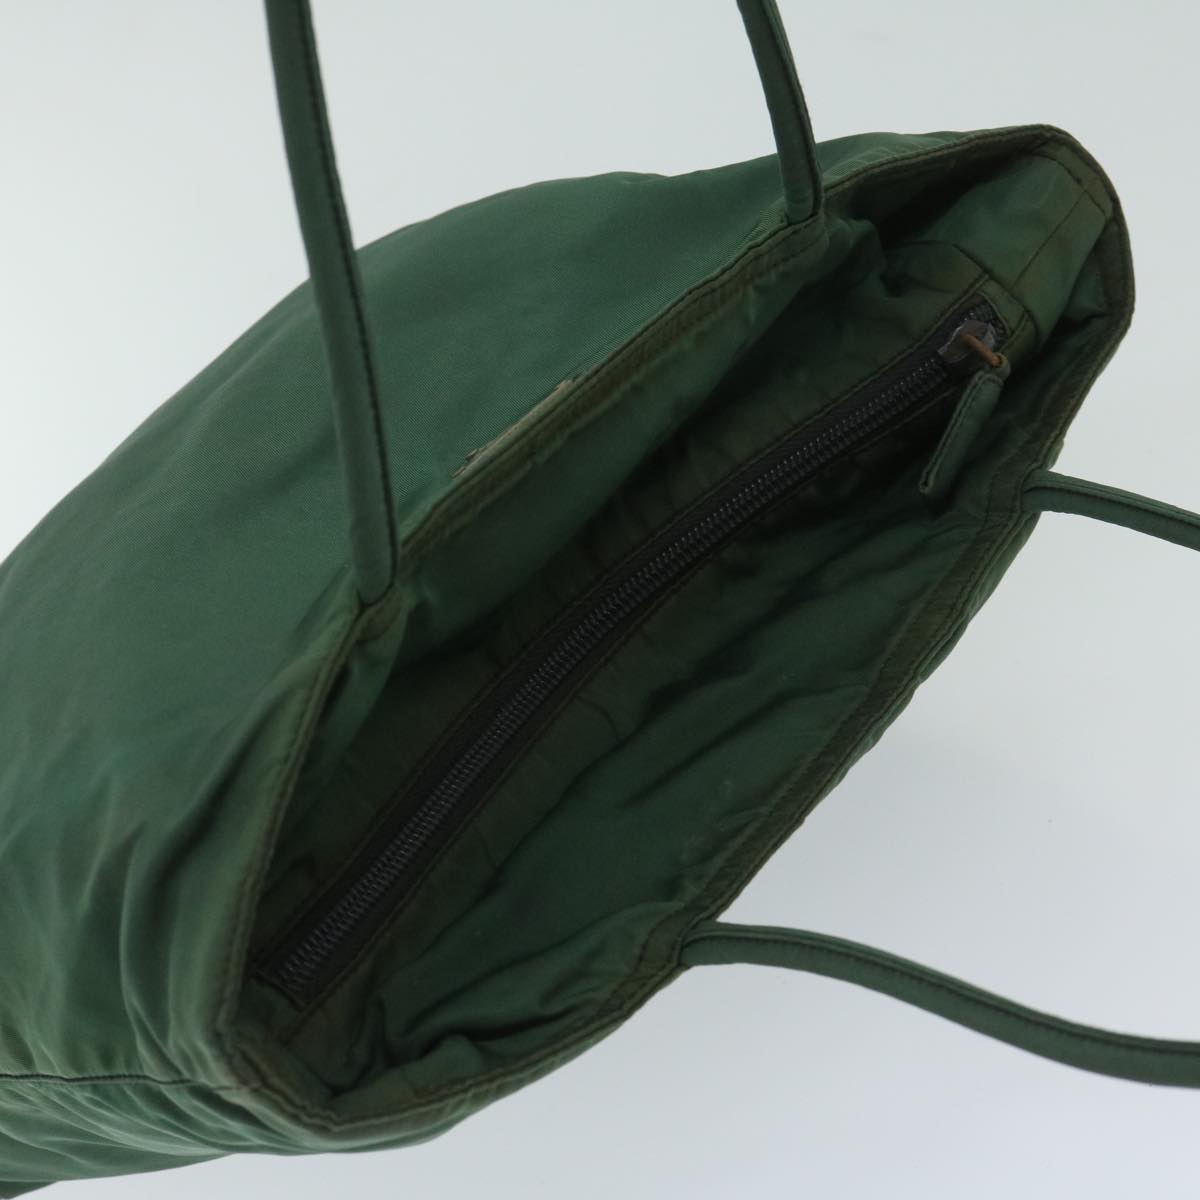 PRADA Hand Bag Nylon Green Auth bs13153